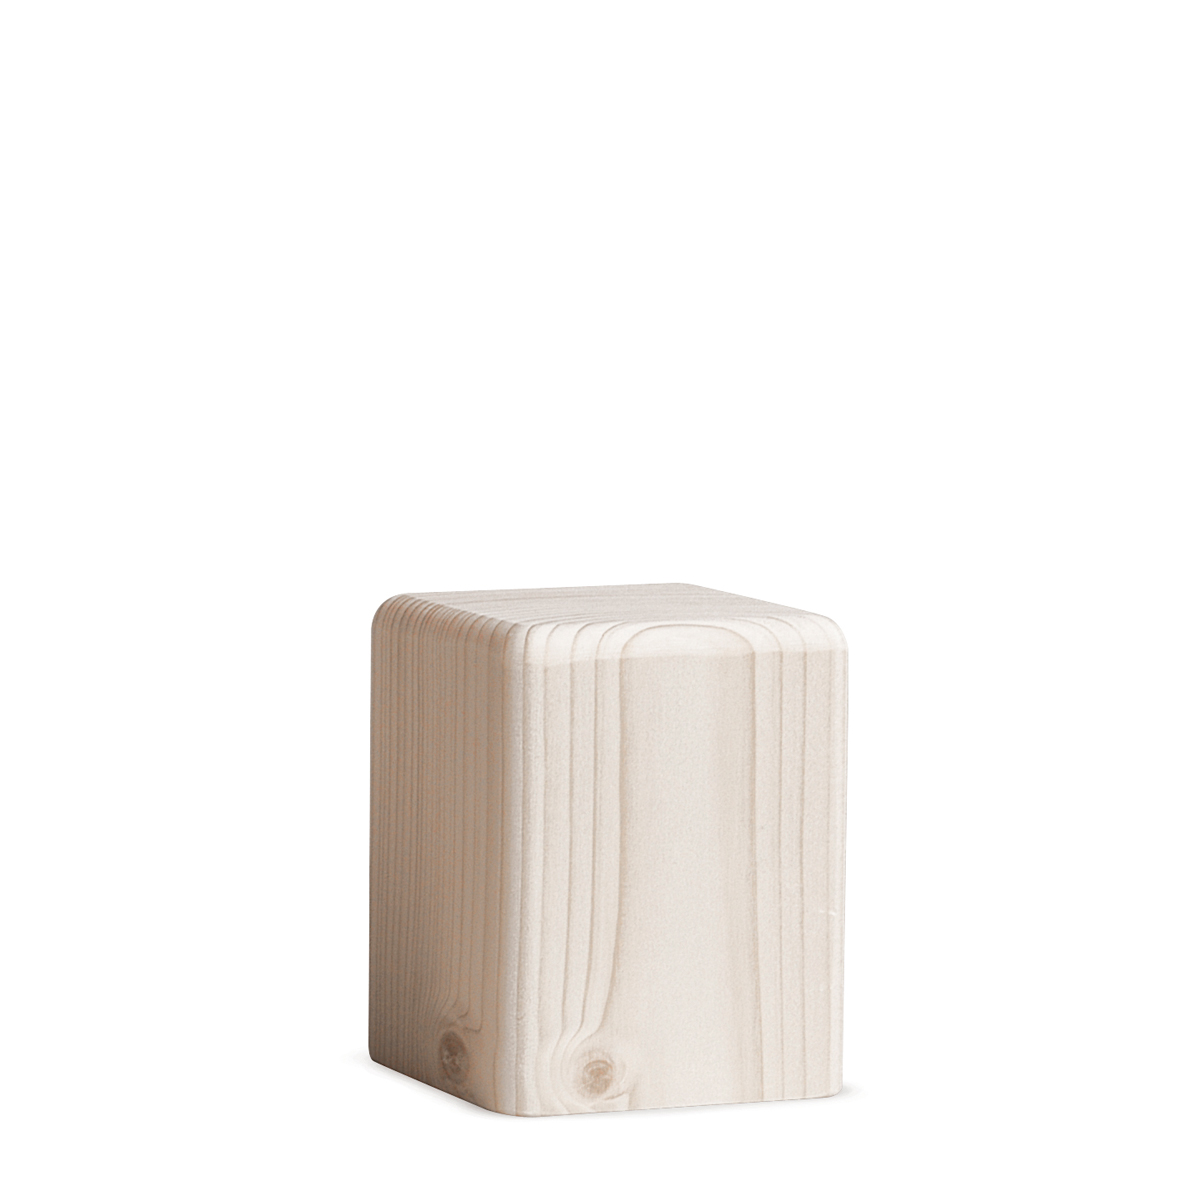 Block medium, Height 8 cm, white